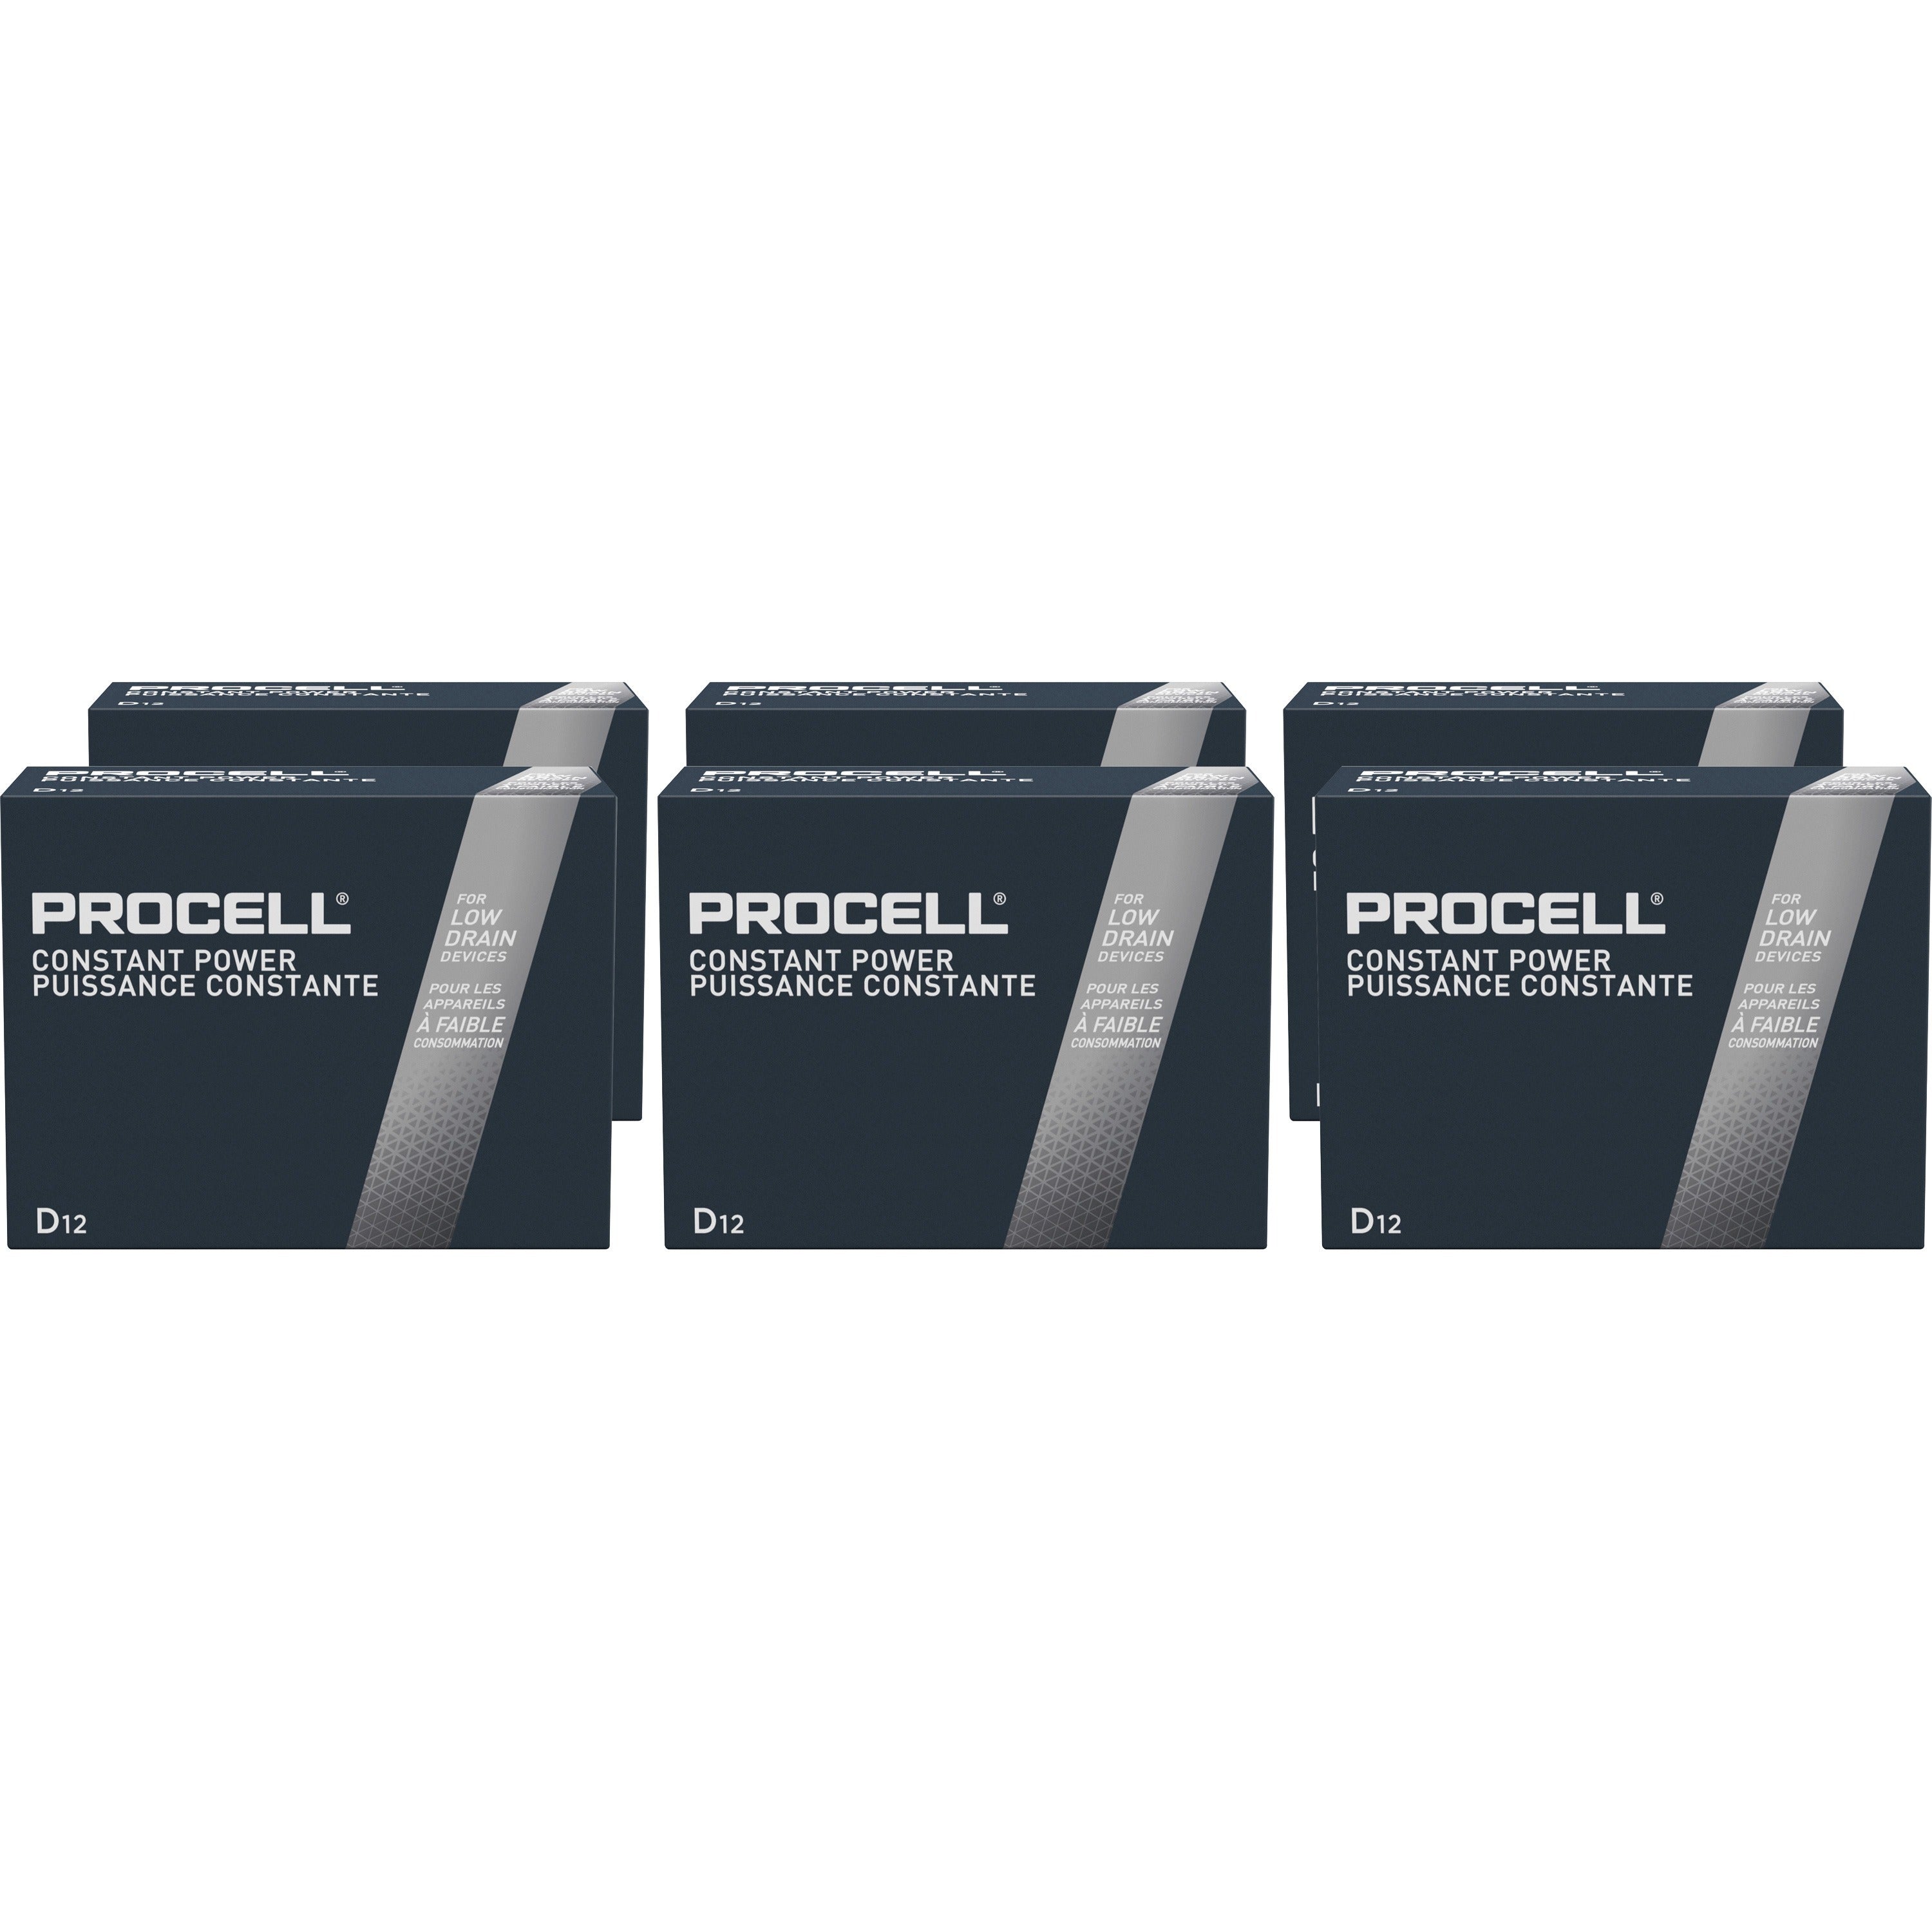 duracell-procell-alkaline-d-battery-boxes-of-12-for-multipurpose-d-14000-mah-15-v-dc-72-carton_durpc1300ct - 1